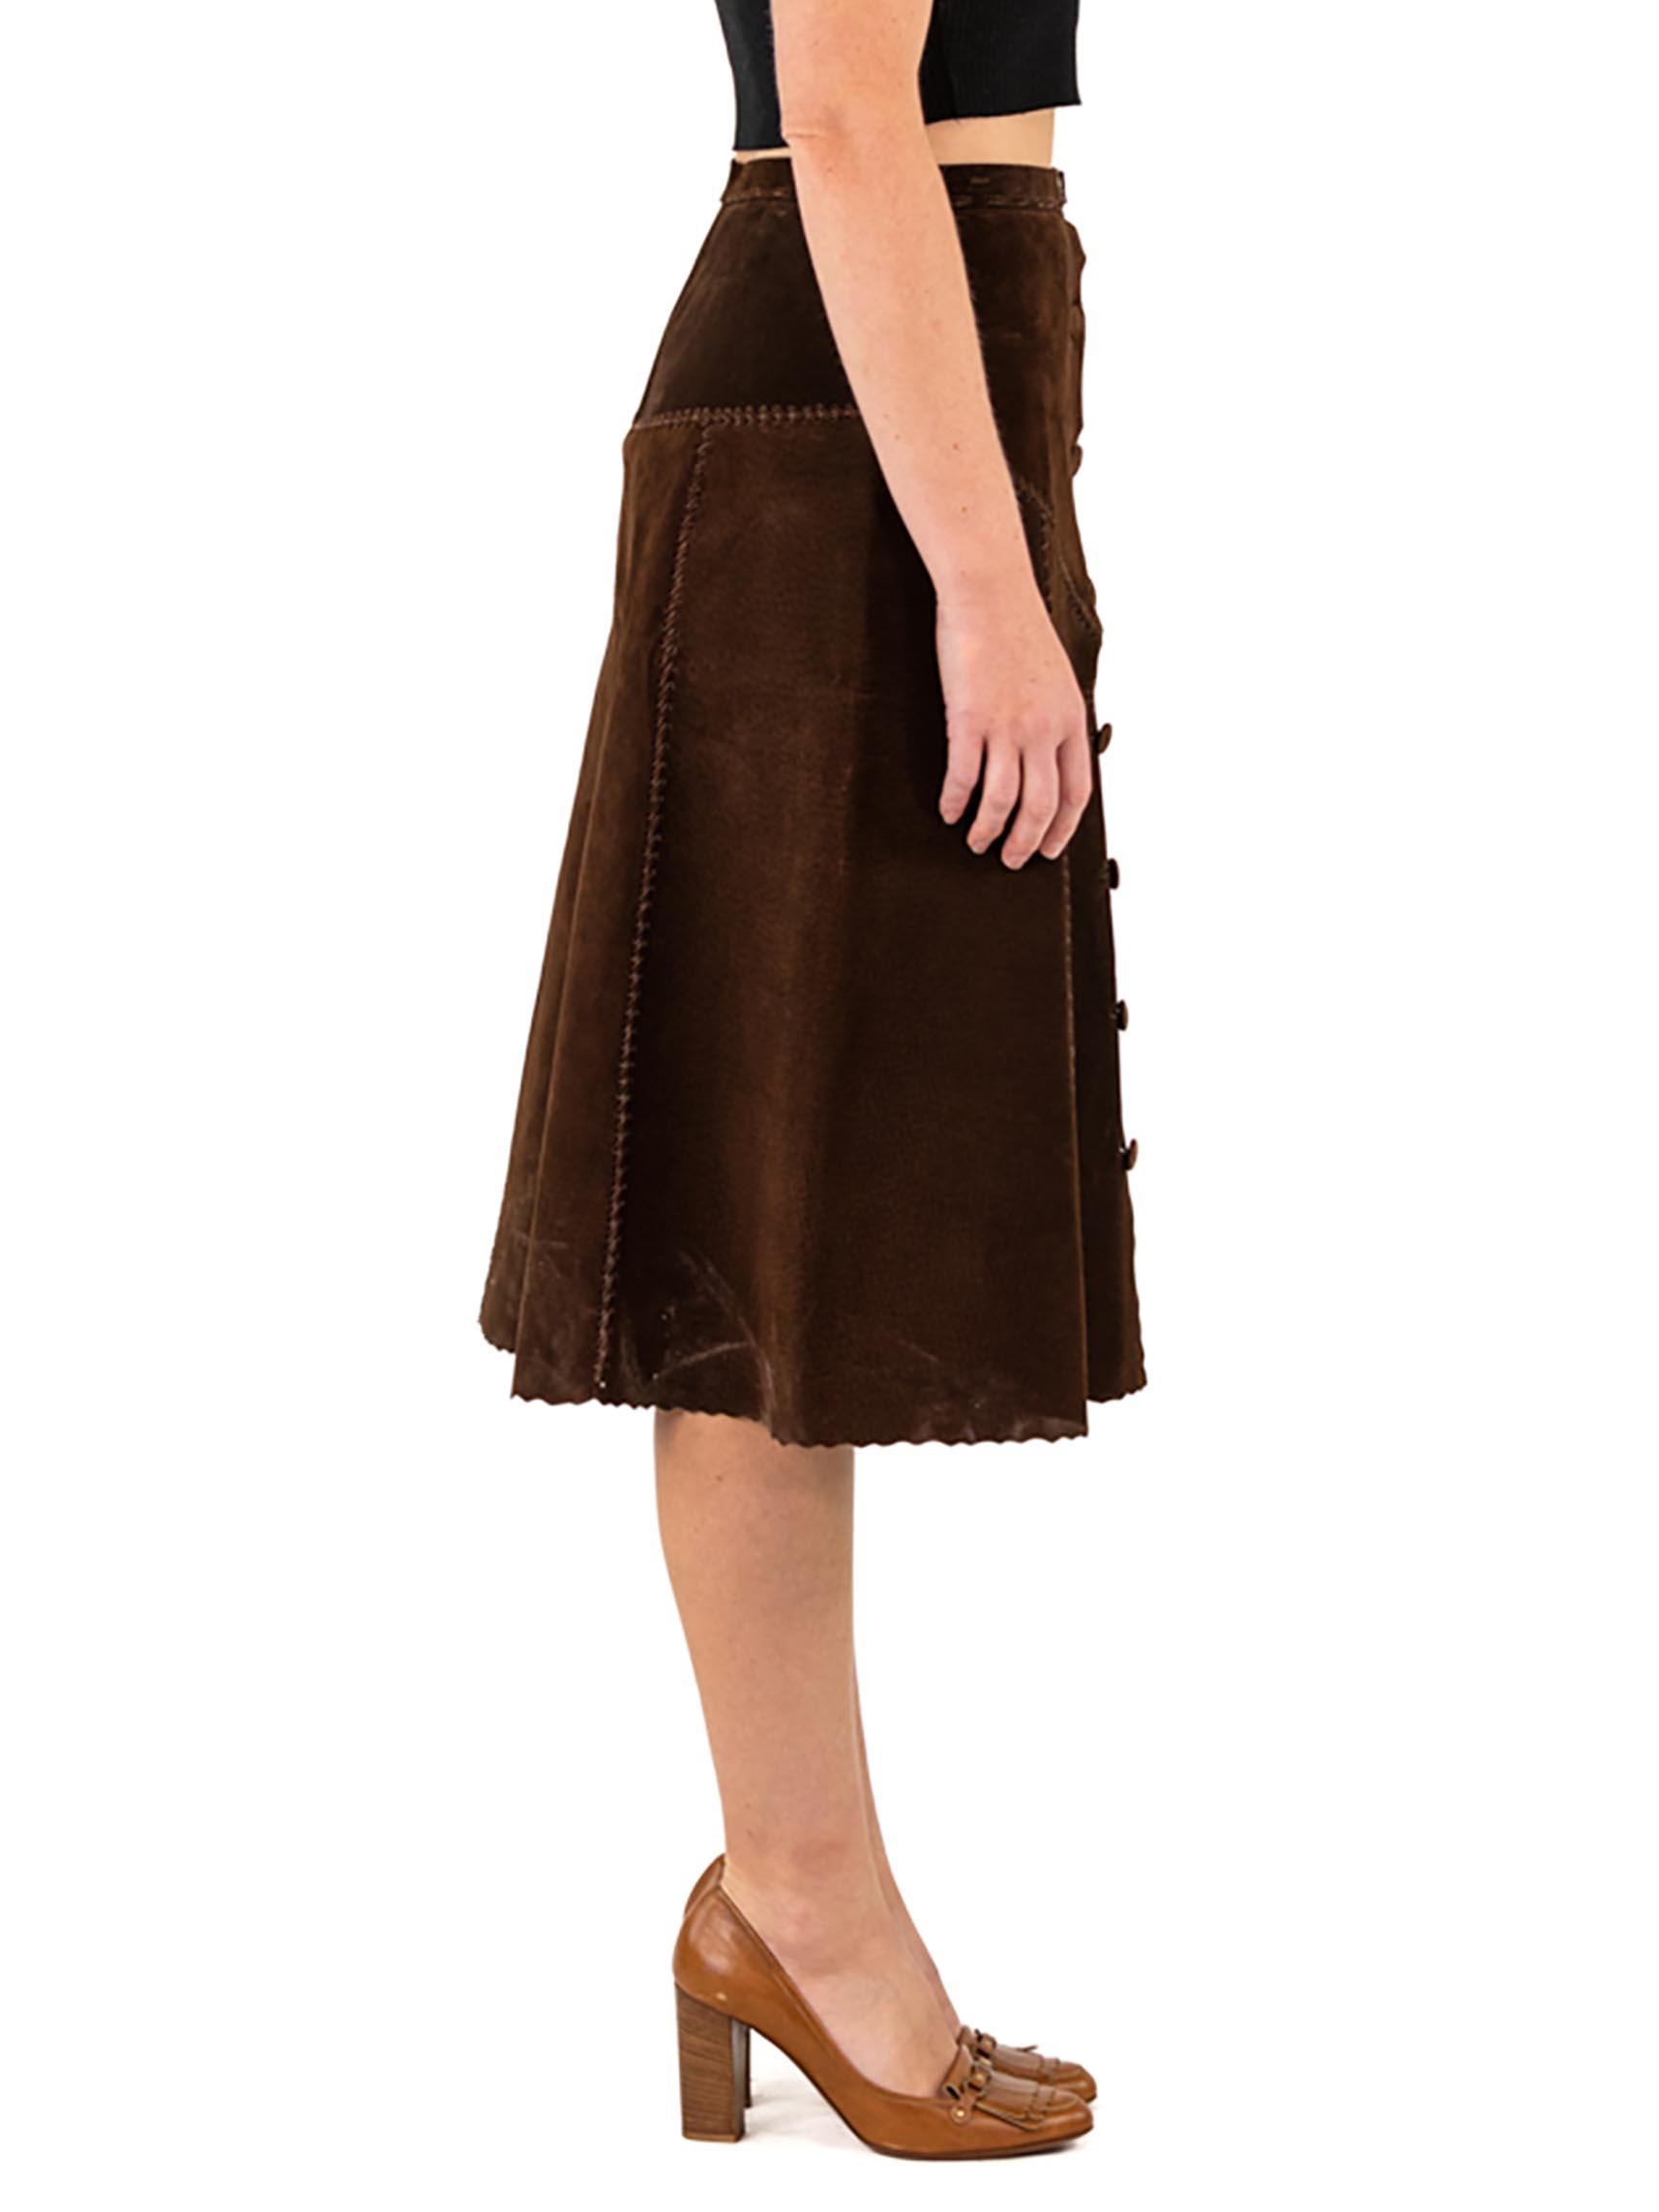 Women's 1970S Dark Chocolate Brown Suede Skirt With Snaps